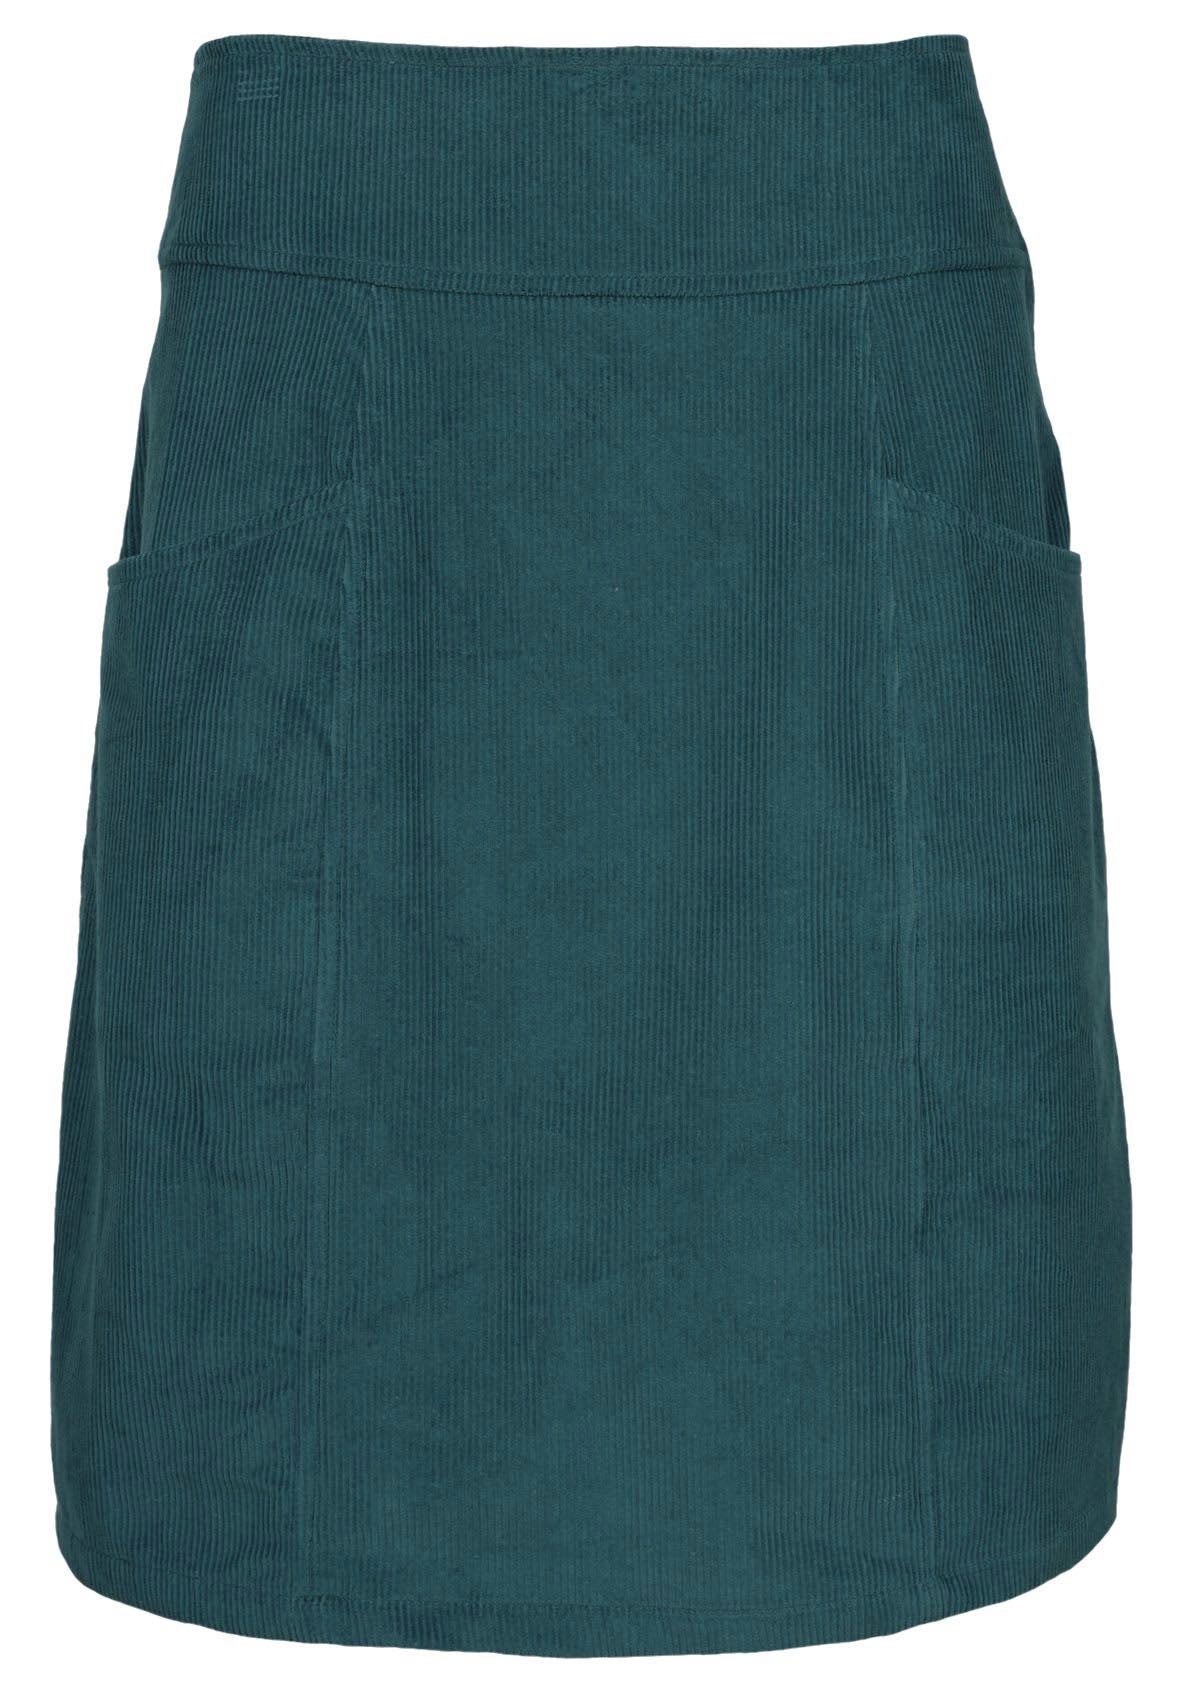 Deep teal coloured corduroy skirt features pockets. 